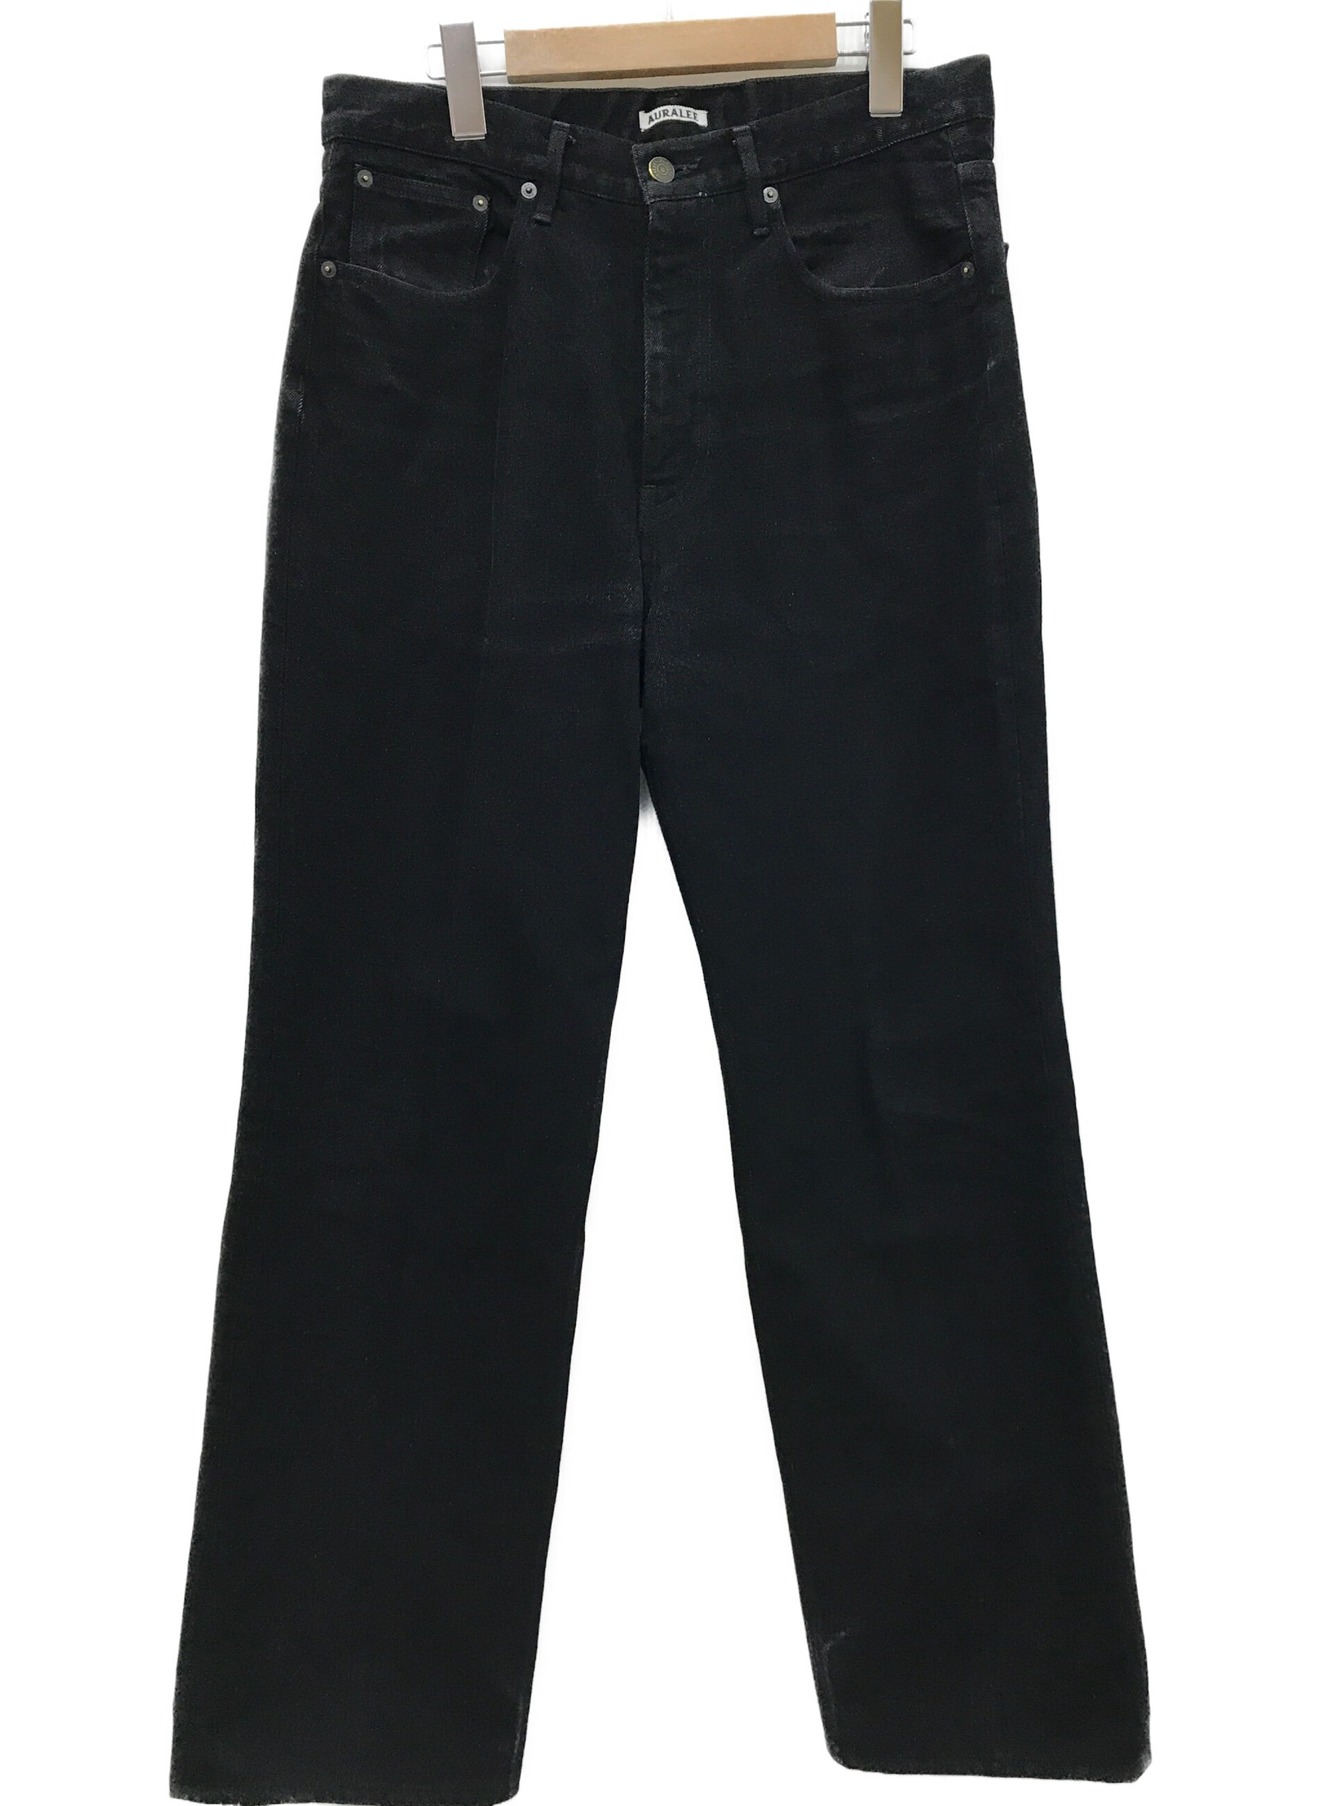 AURALEE (オーラリー) HARD TWIST DENIM 5P PANTS ブラック サイズ:81cm (W32)